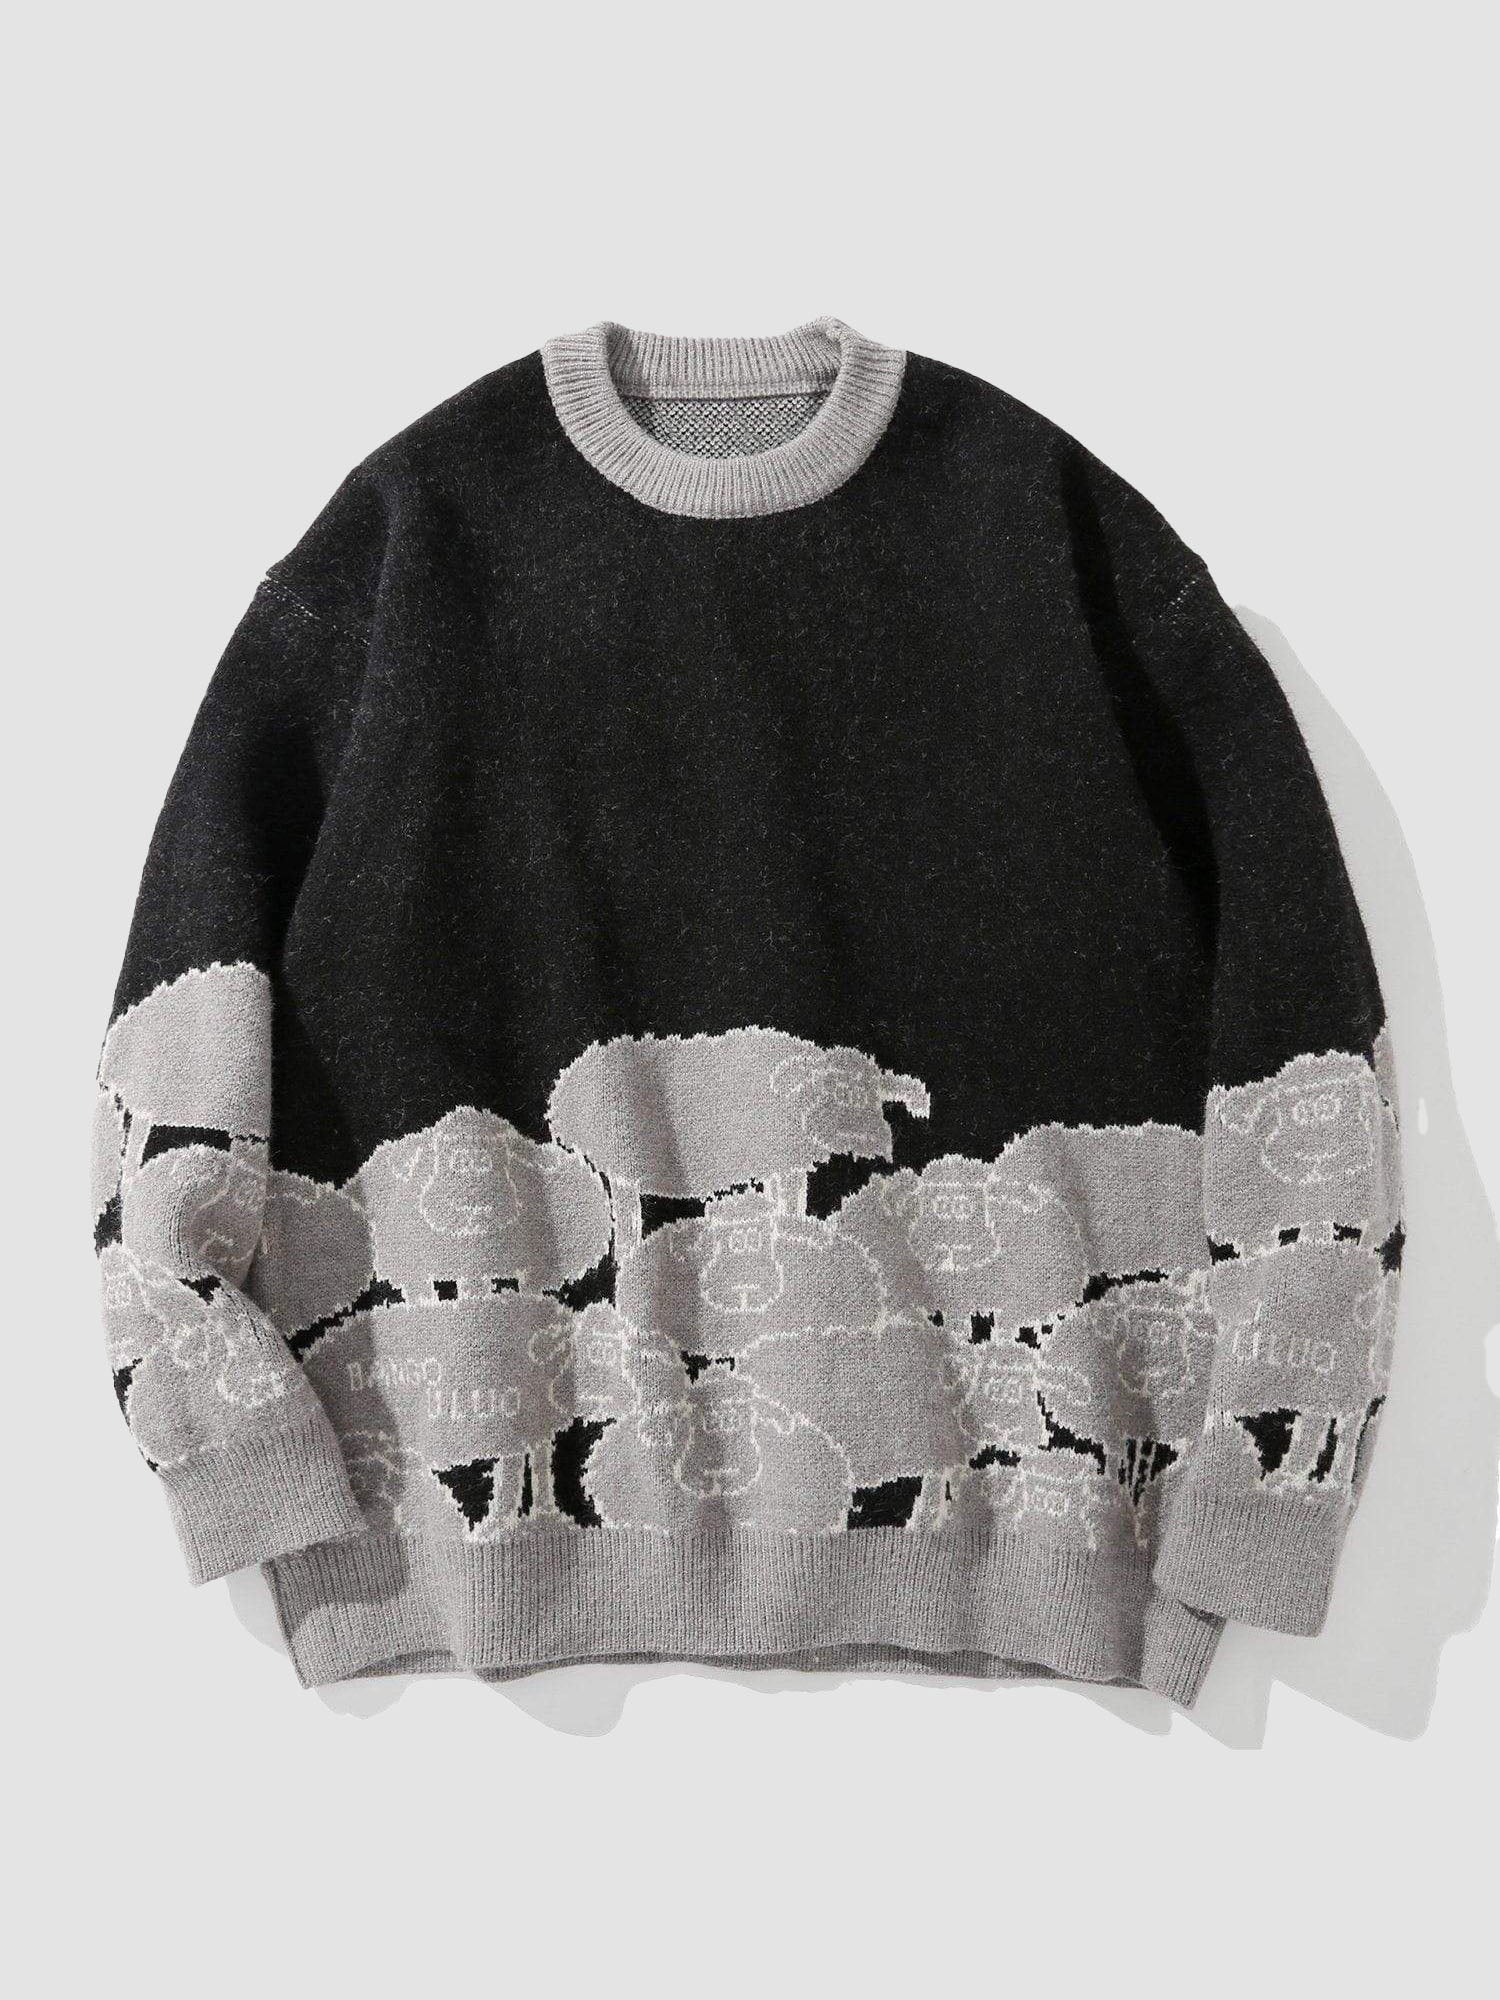 JUSTNOTAG Vintage Cartoon Sheep Print Sweaters